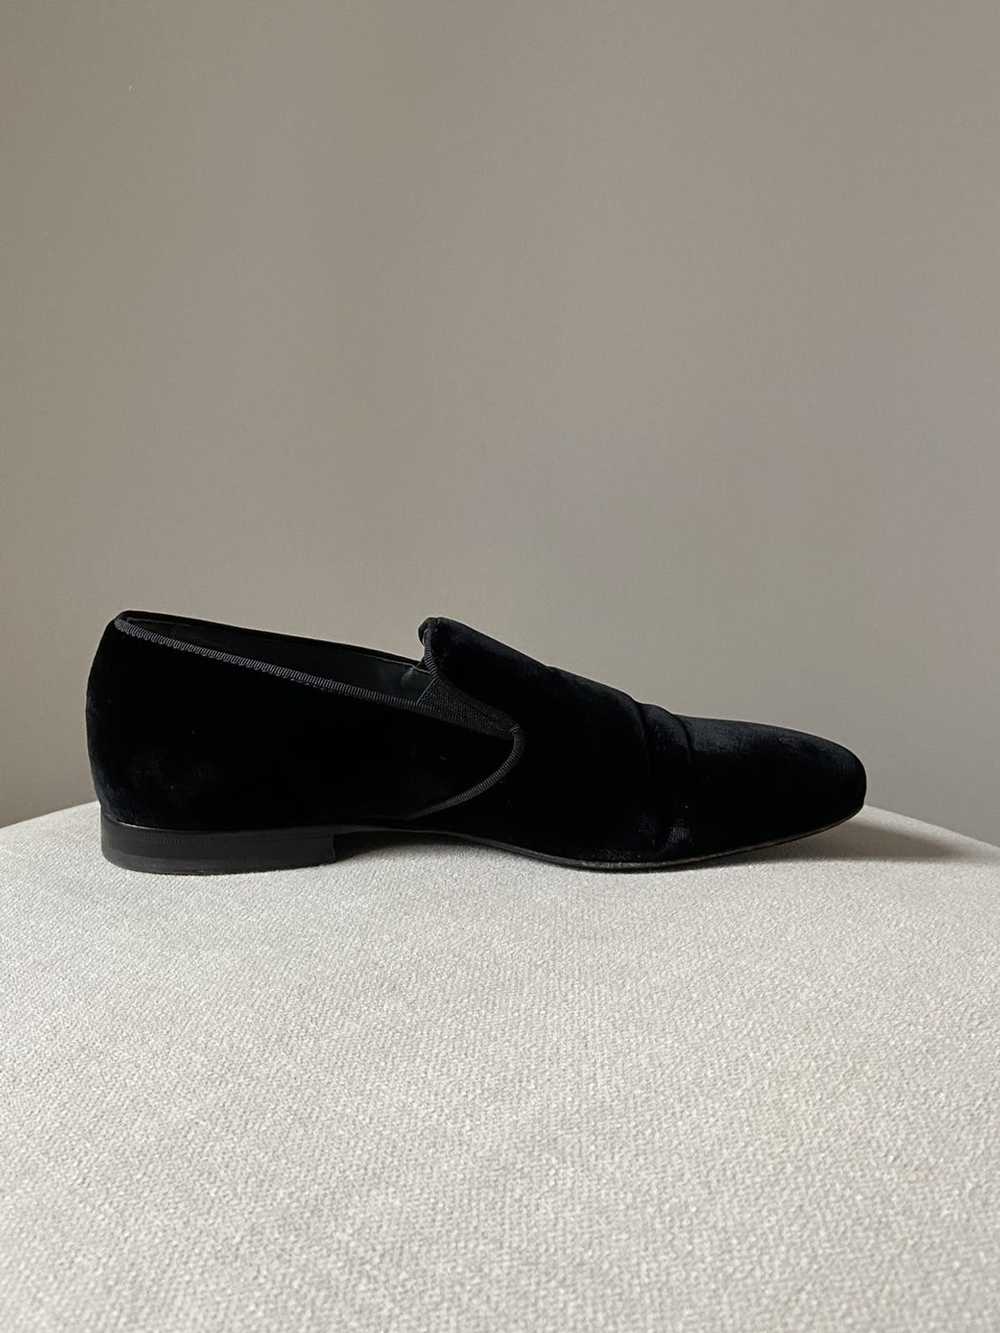 Lanvin Lanvin velvet black formal shoes - image 3